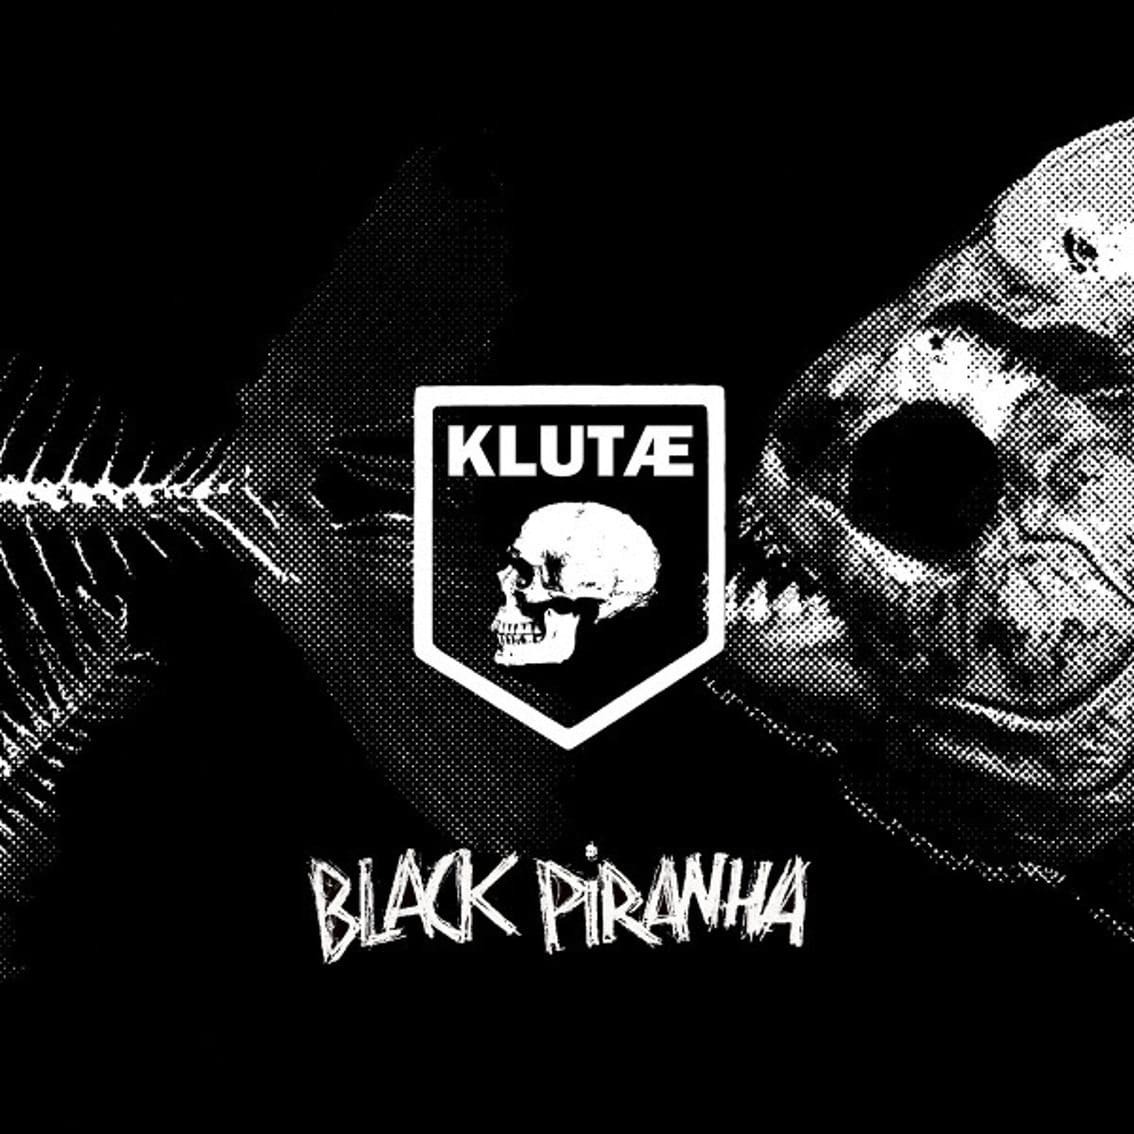 Klutae's 'Black Piranha' album re-released on double vinyl including bonus tracks